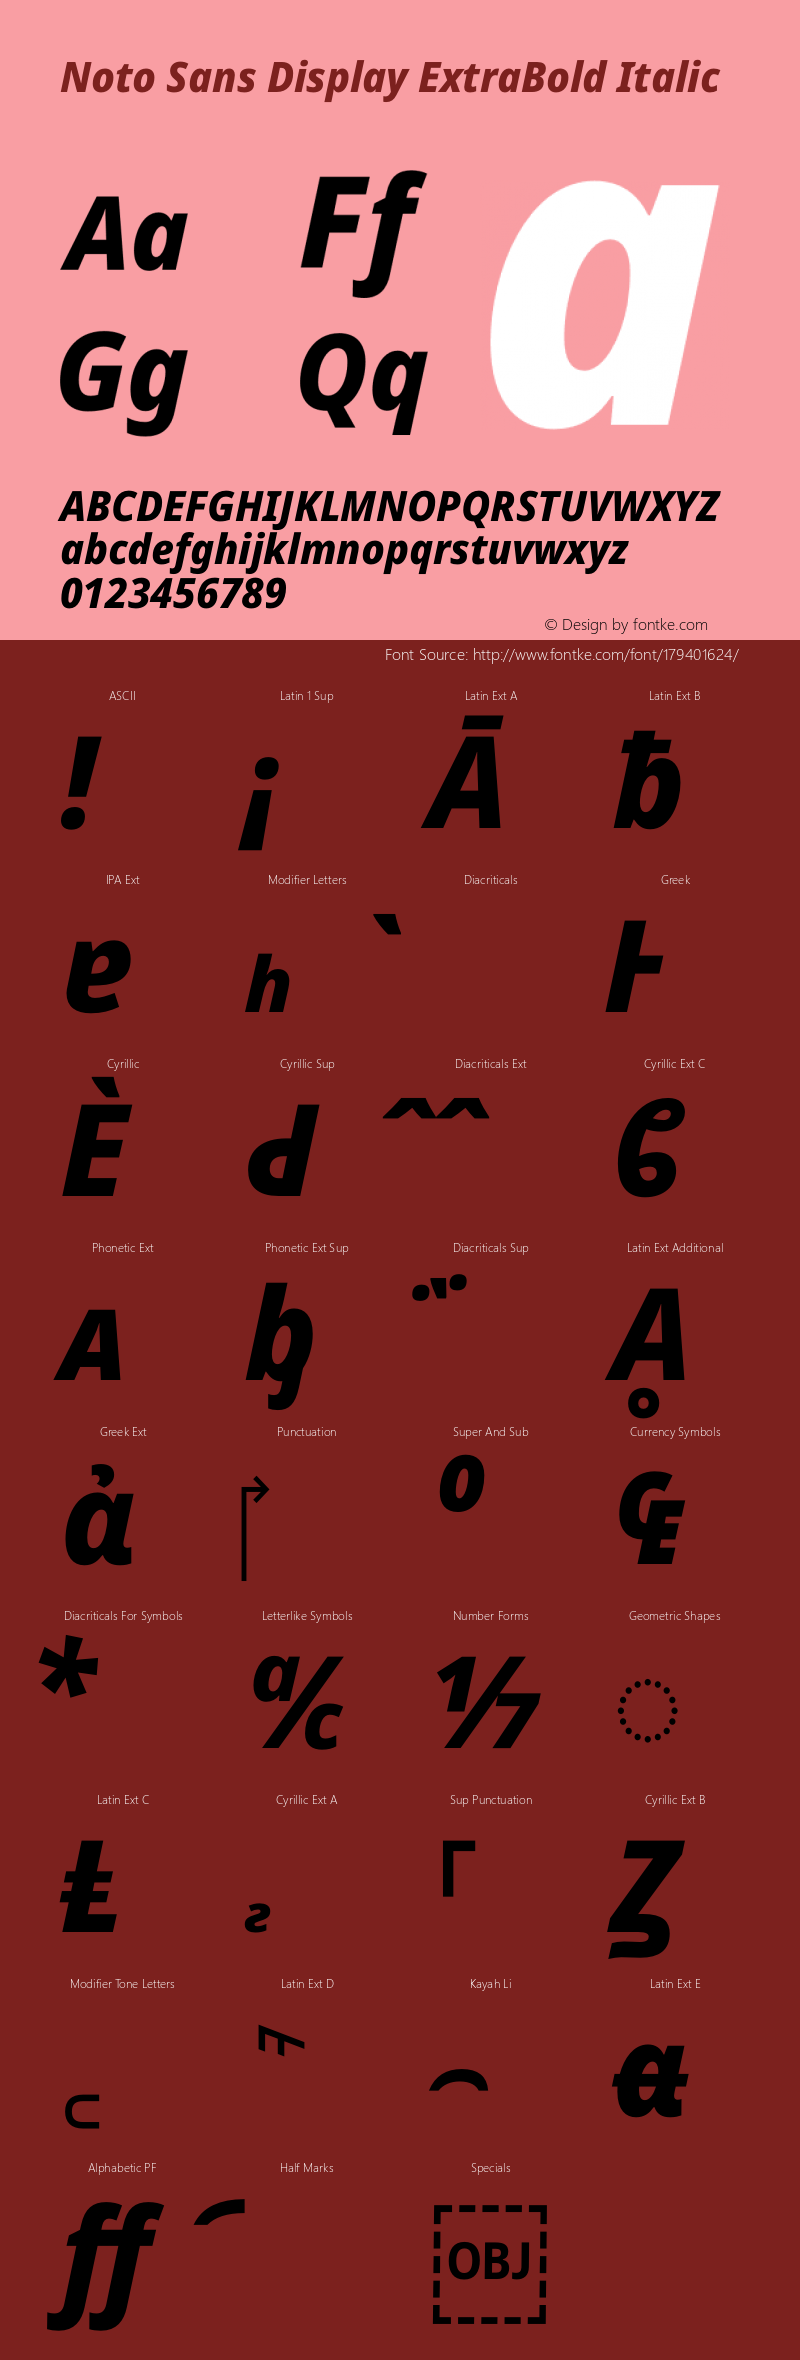 Noto Sans Display ExtraBold Italic Version 2.005图片样张